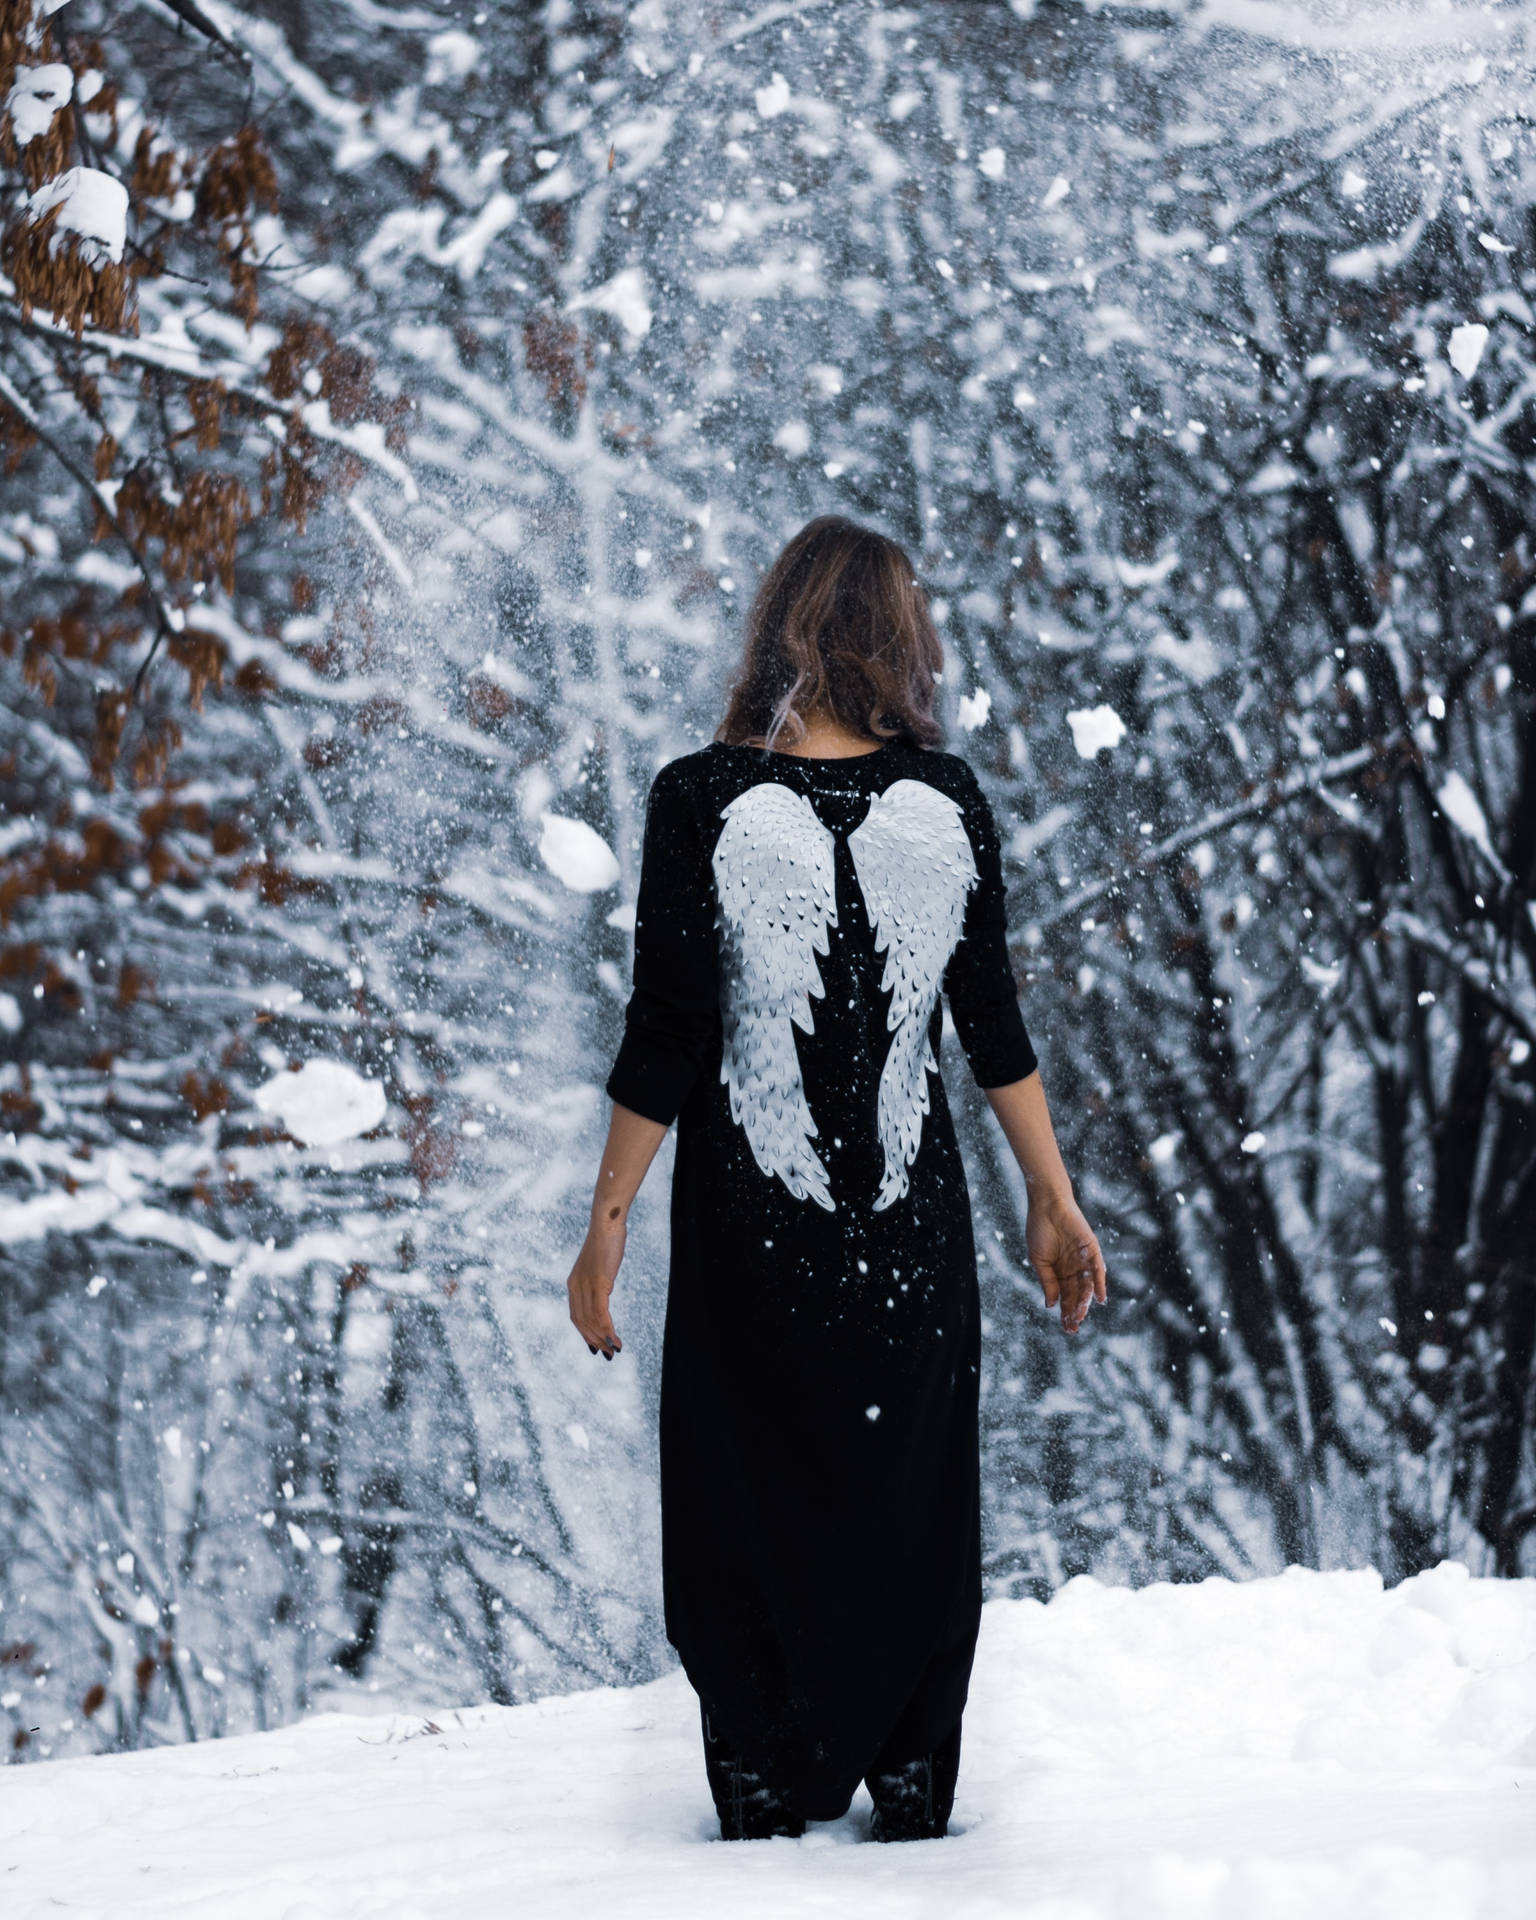 Angel Girl In Snow Wallpaper